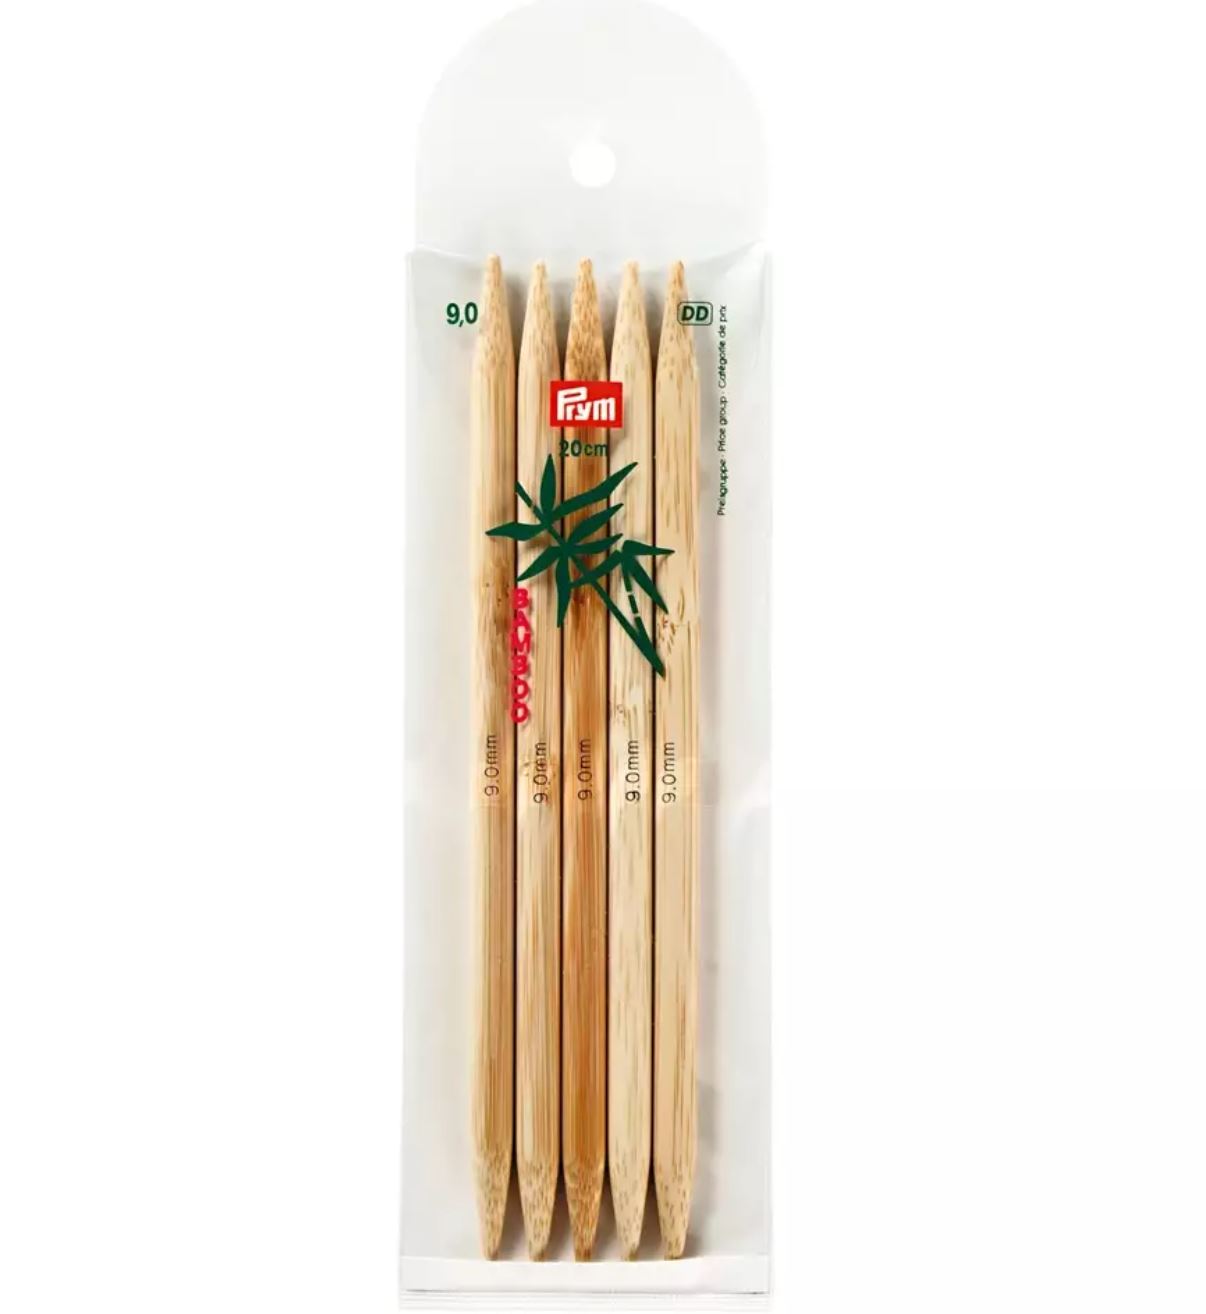 Prym Bamboo Settpinne 5stk - Bambus - 9,0 - 20cm